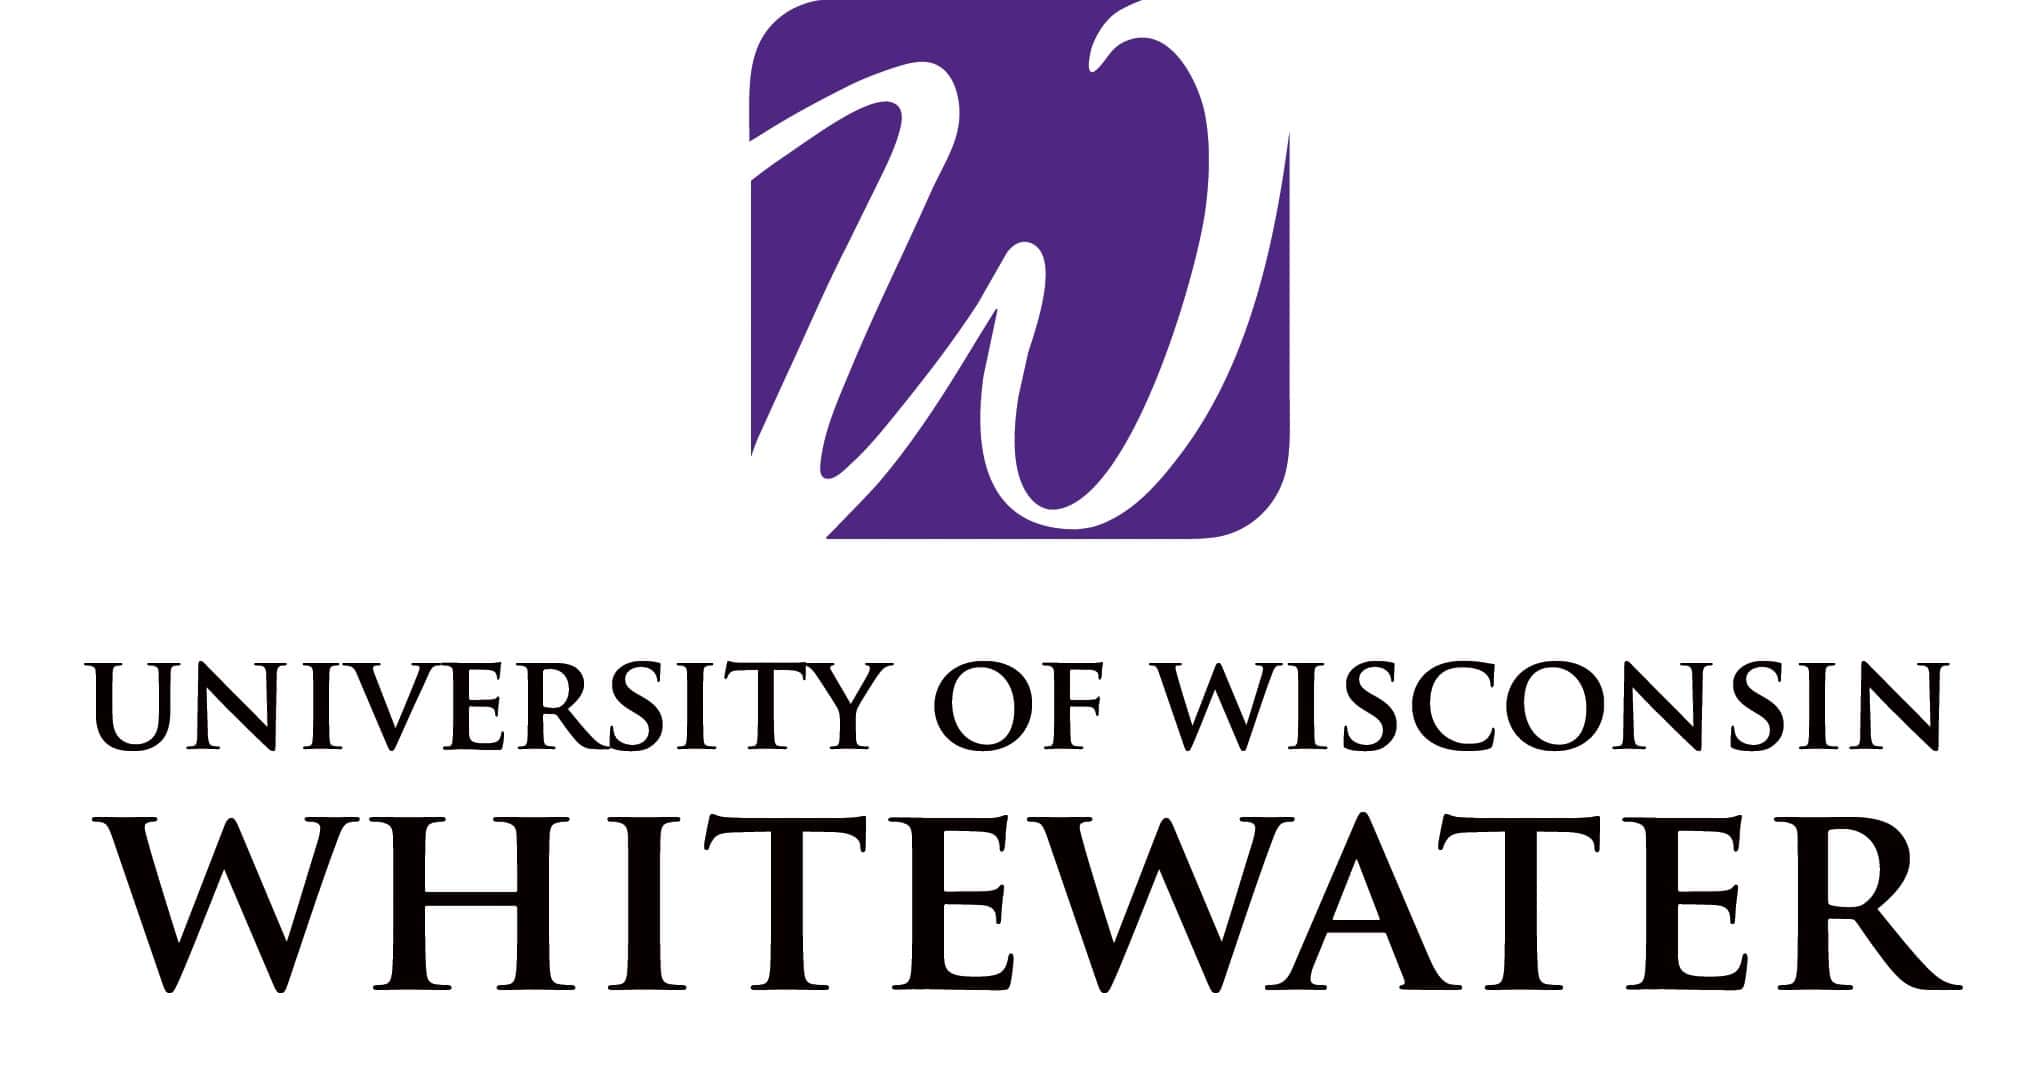 uw-whitewater-logo-two512801